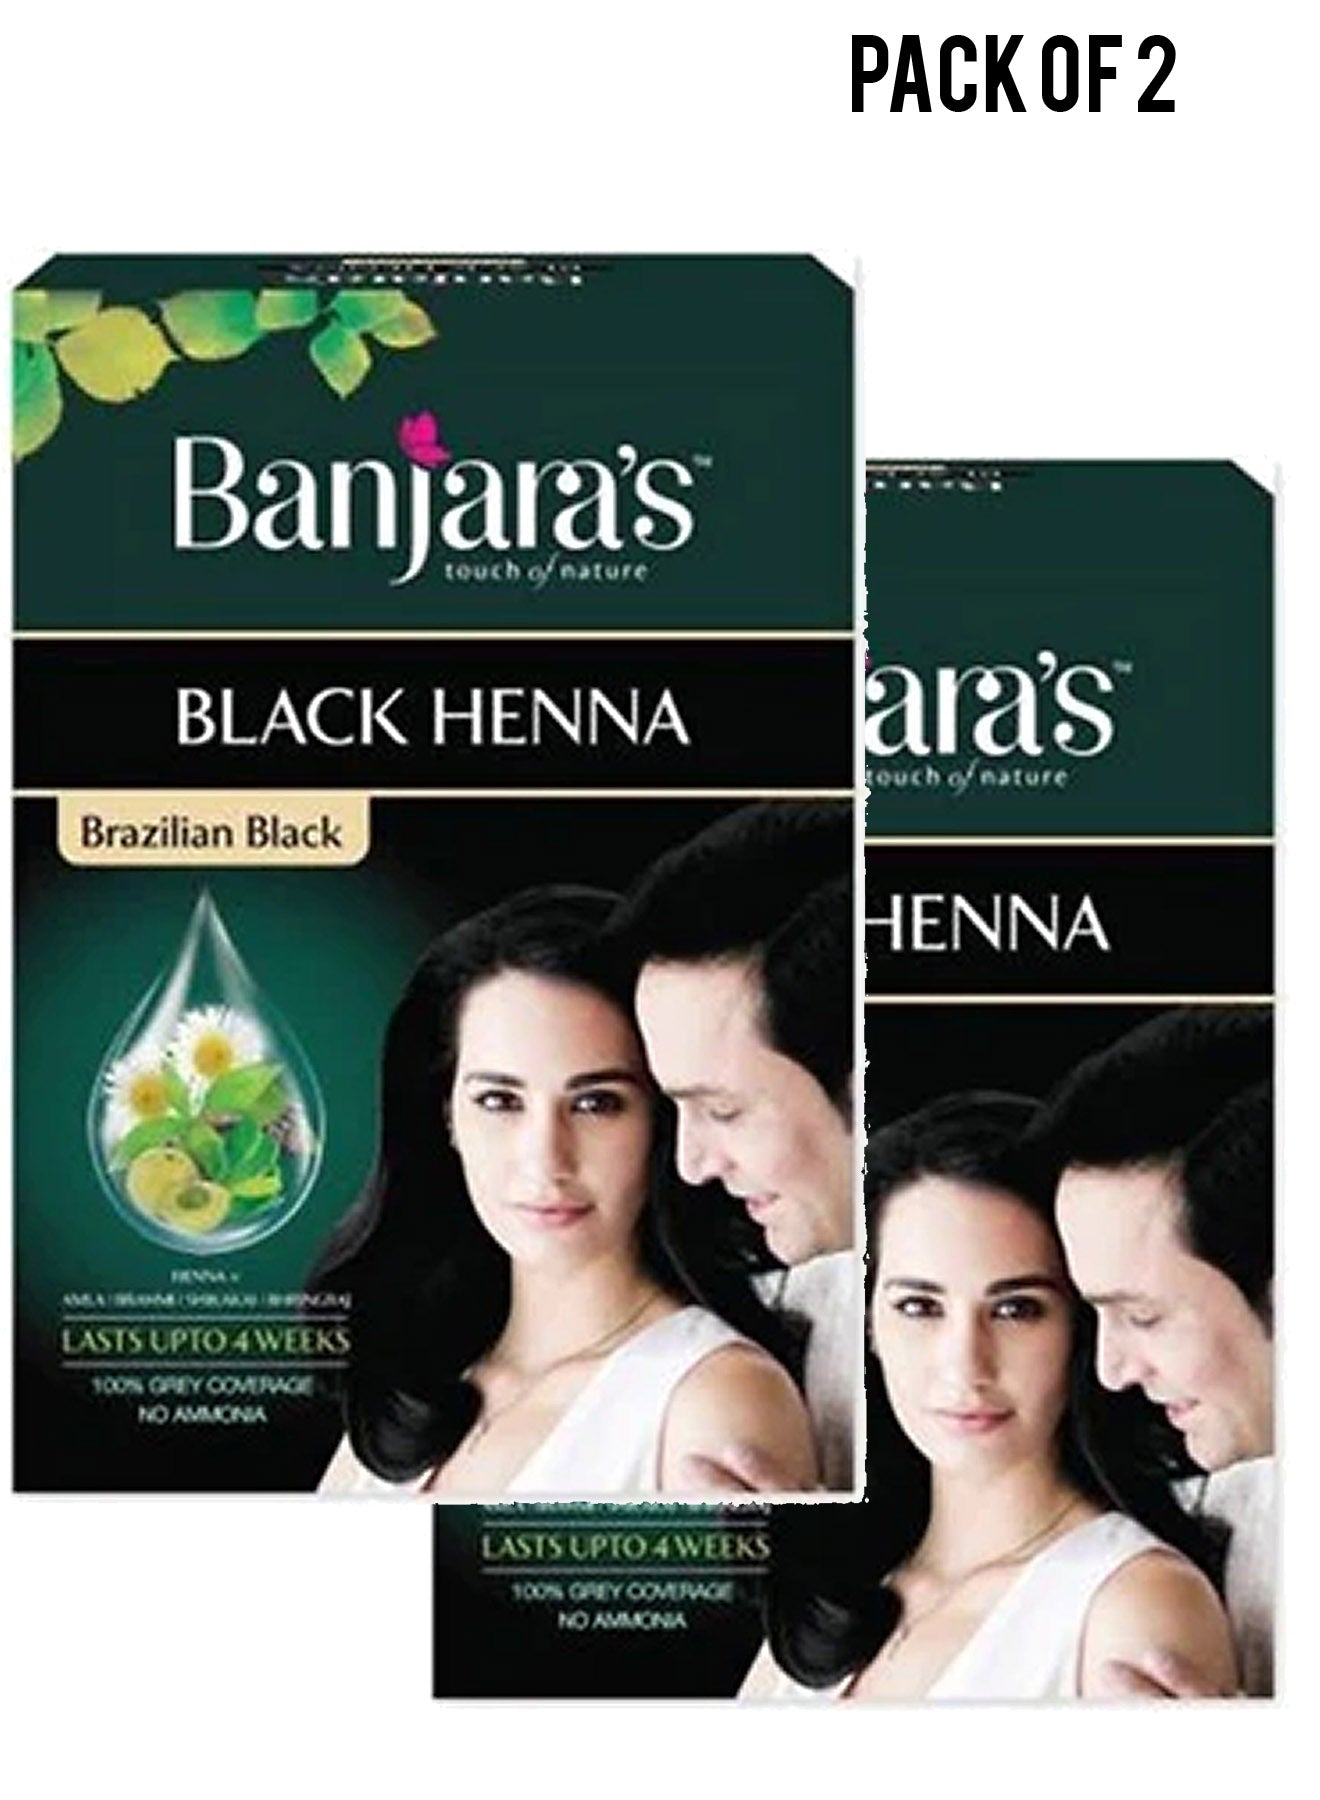 Banjaras Black Henna Brazilian Black 54 gm Value Pack of 2 